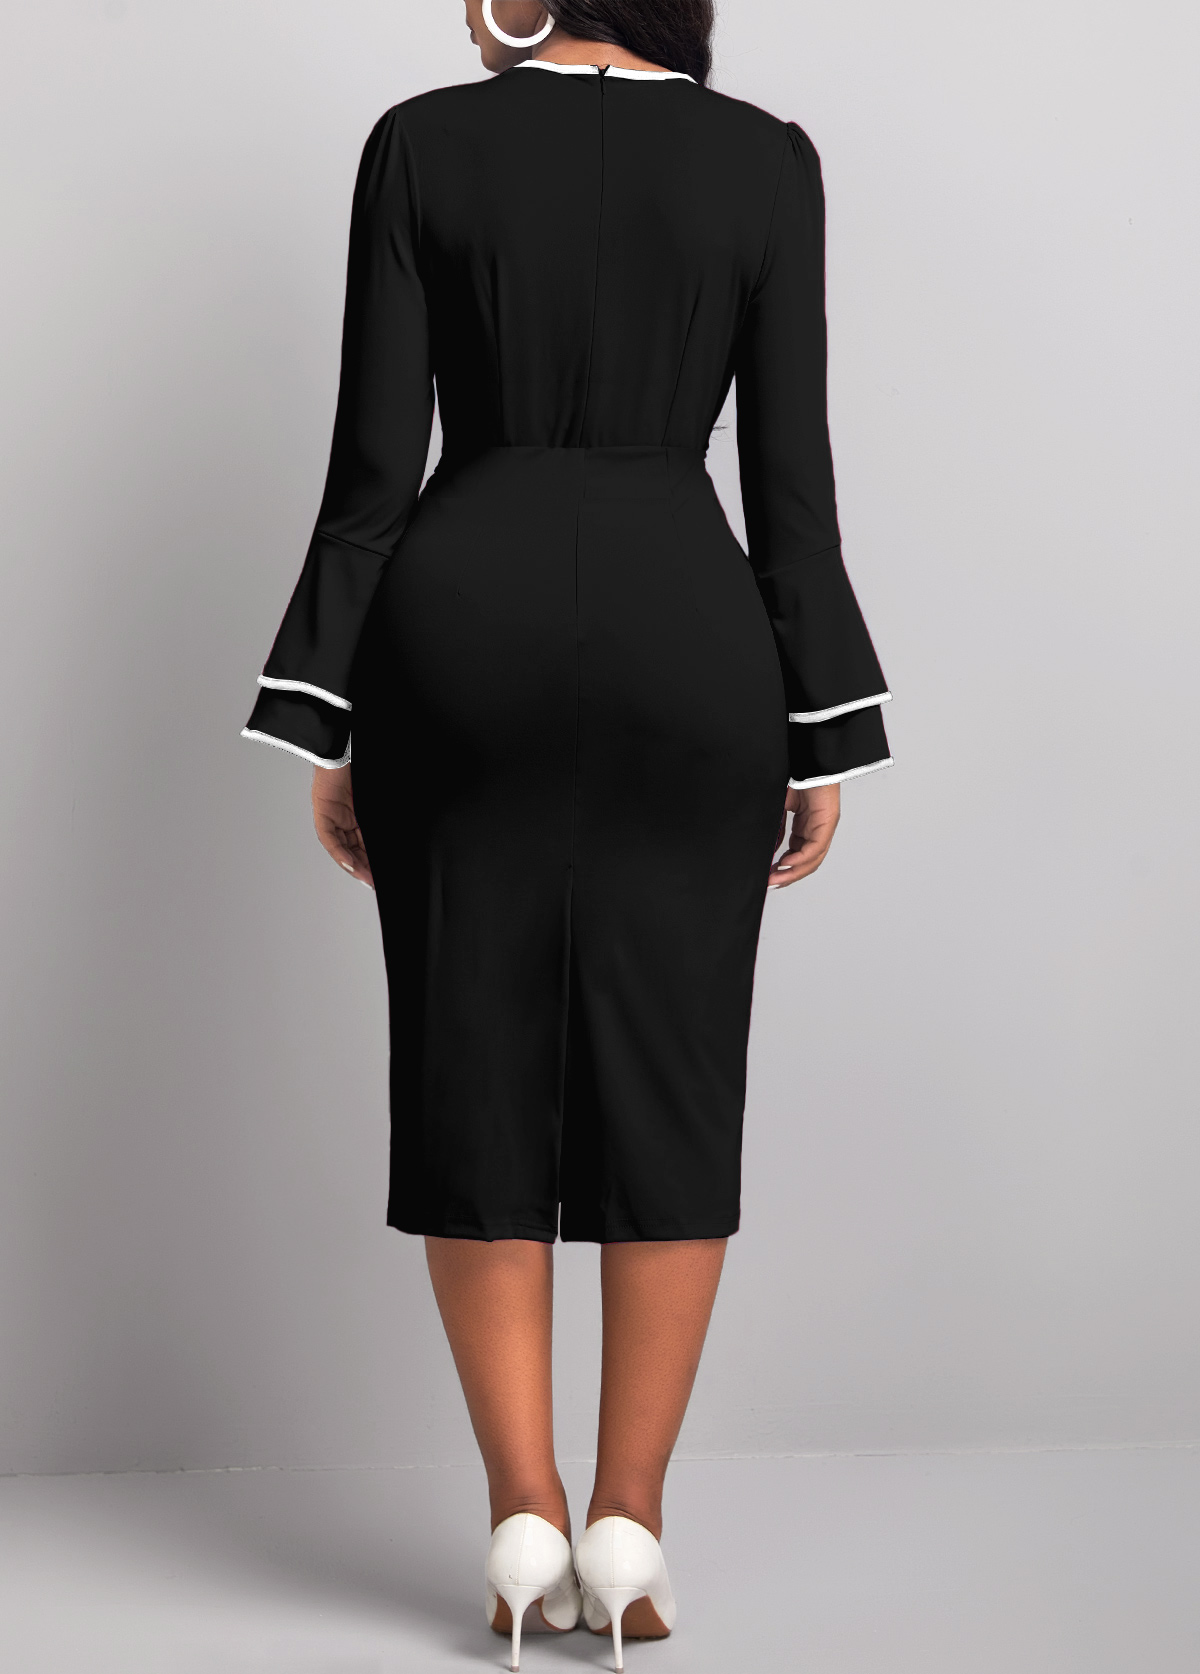 Plus Size Black Split Leaf Print Bodycon Dress